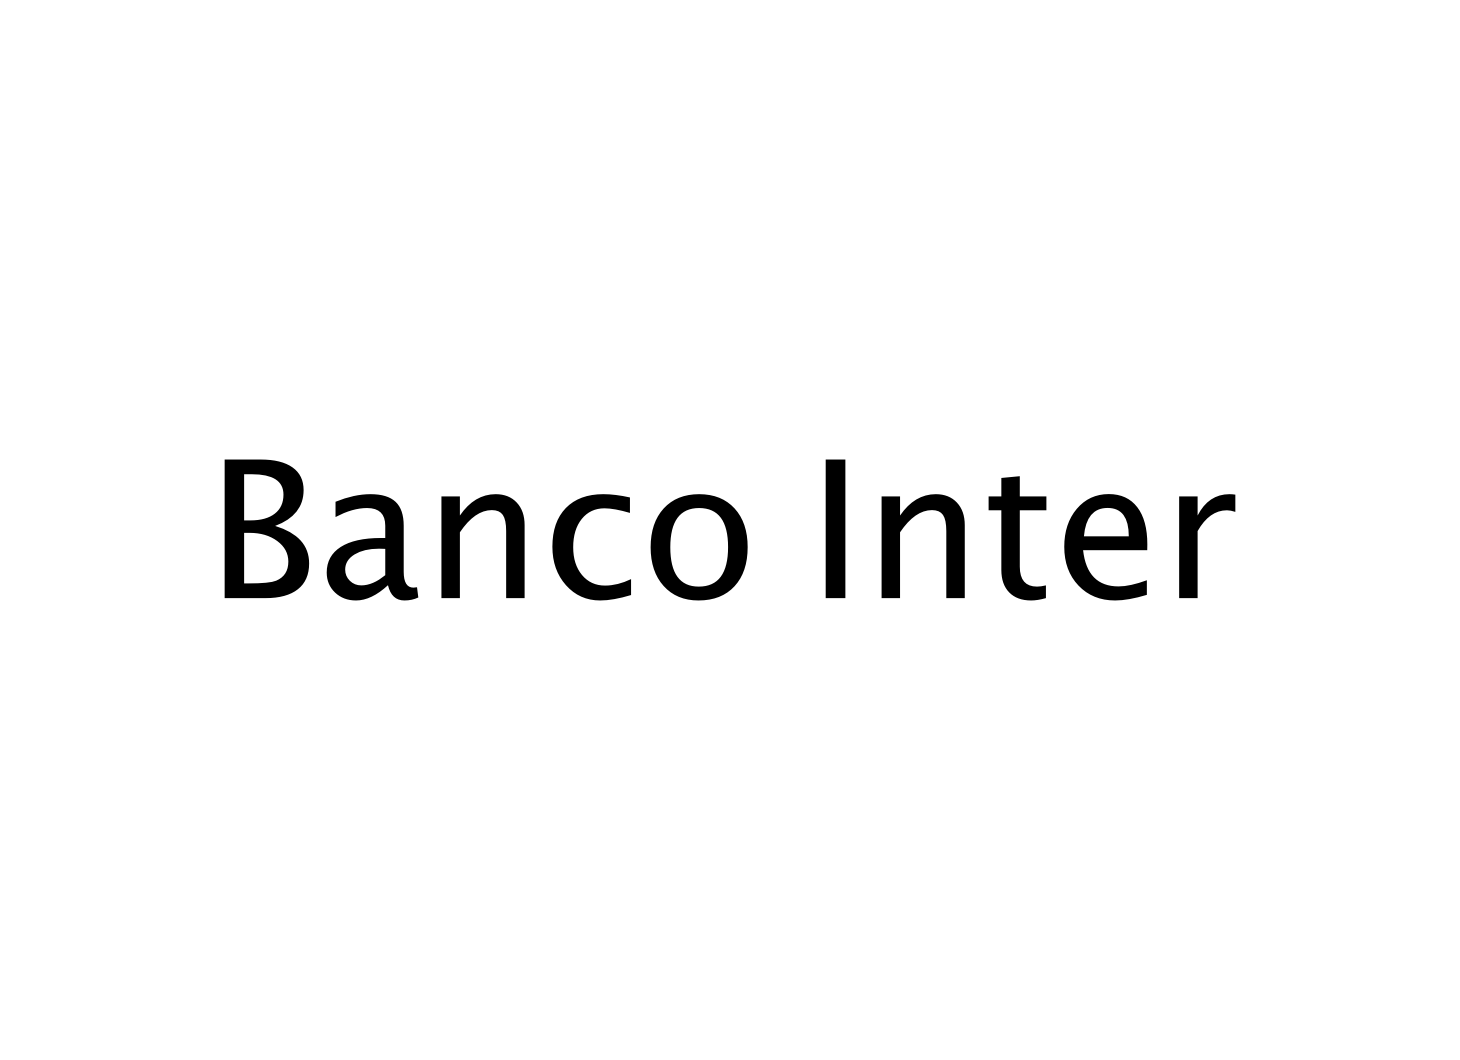 Central de Atendimento Banco Inter, telefones e sac 0800